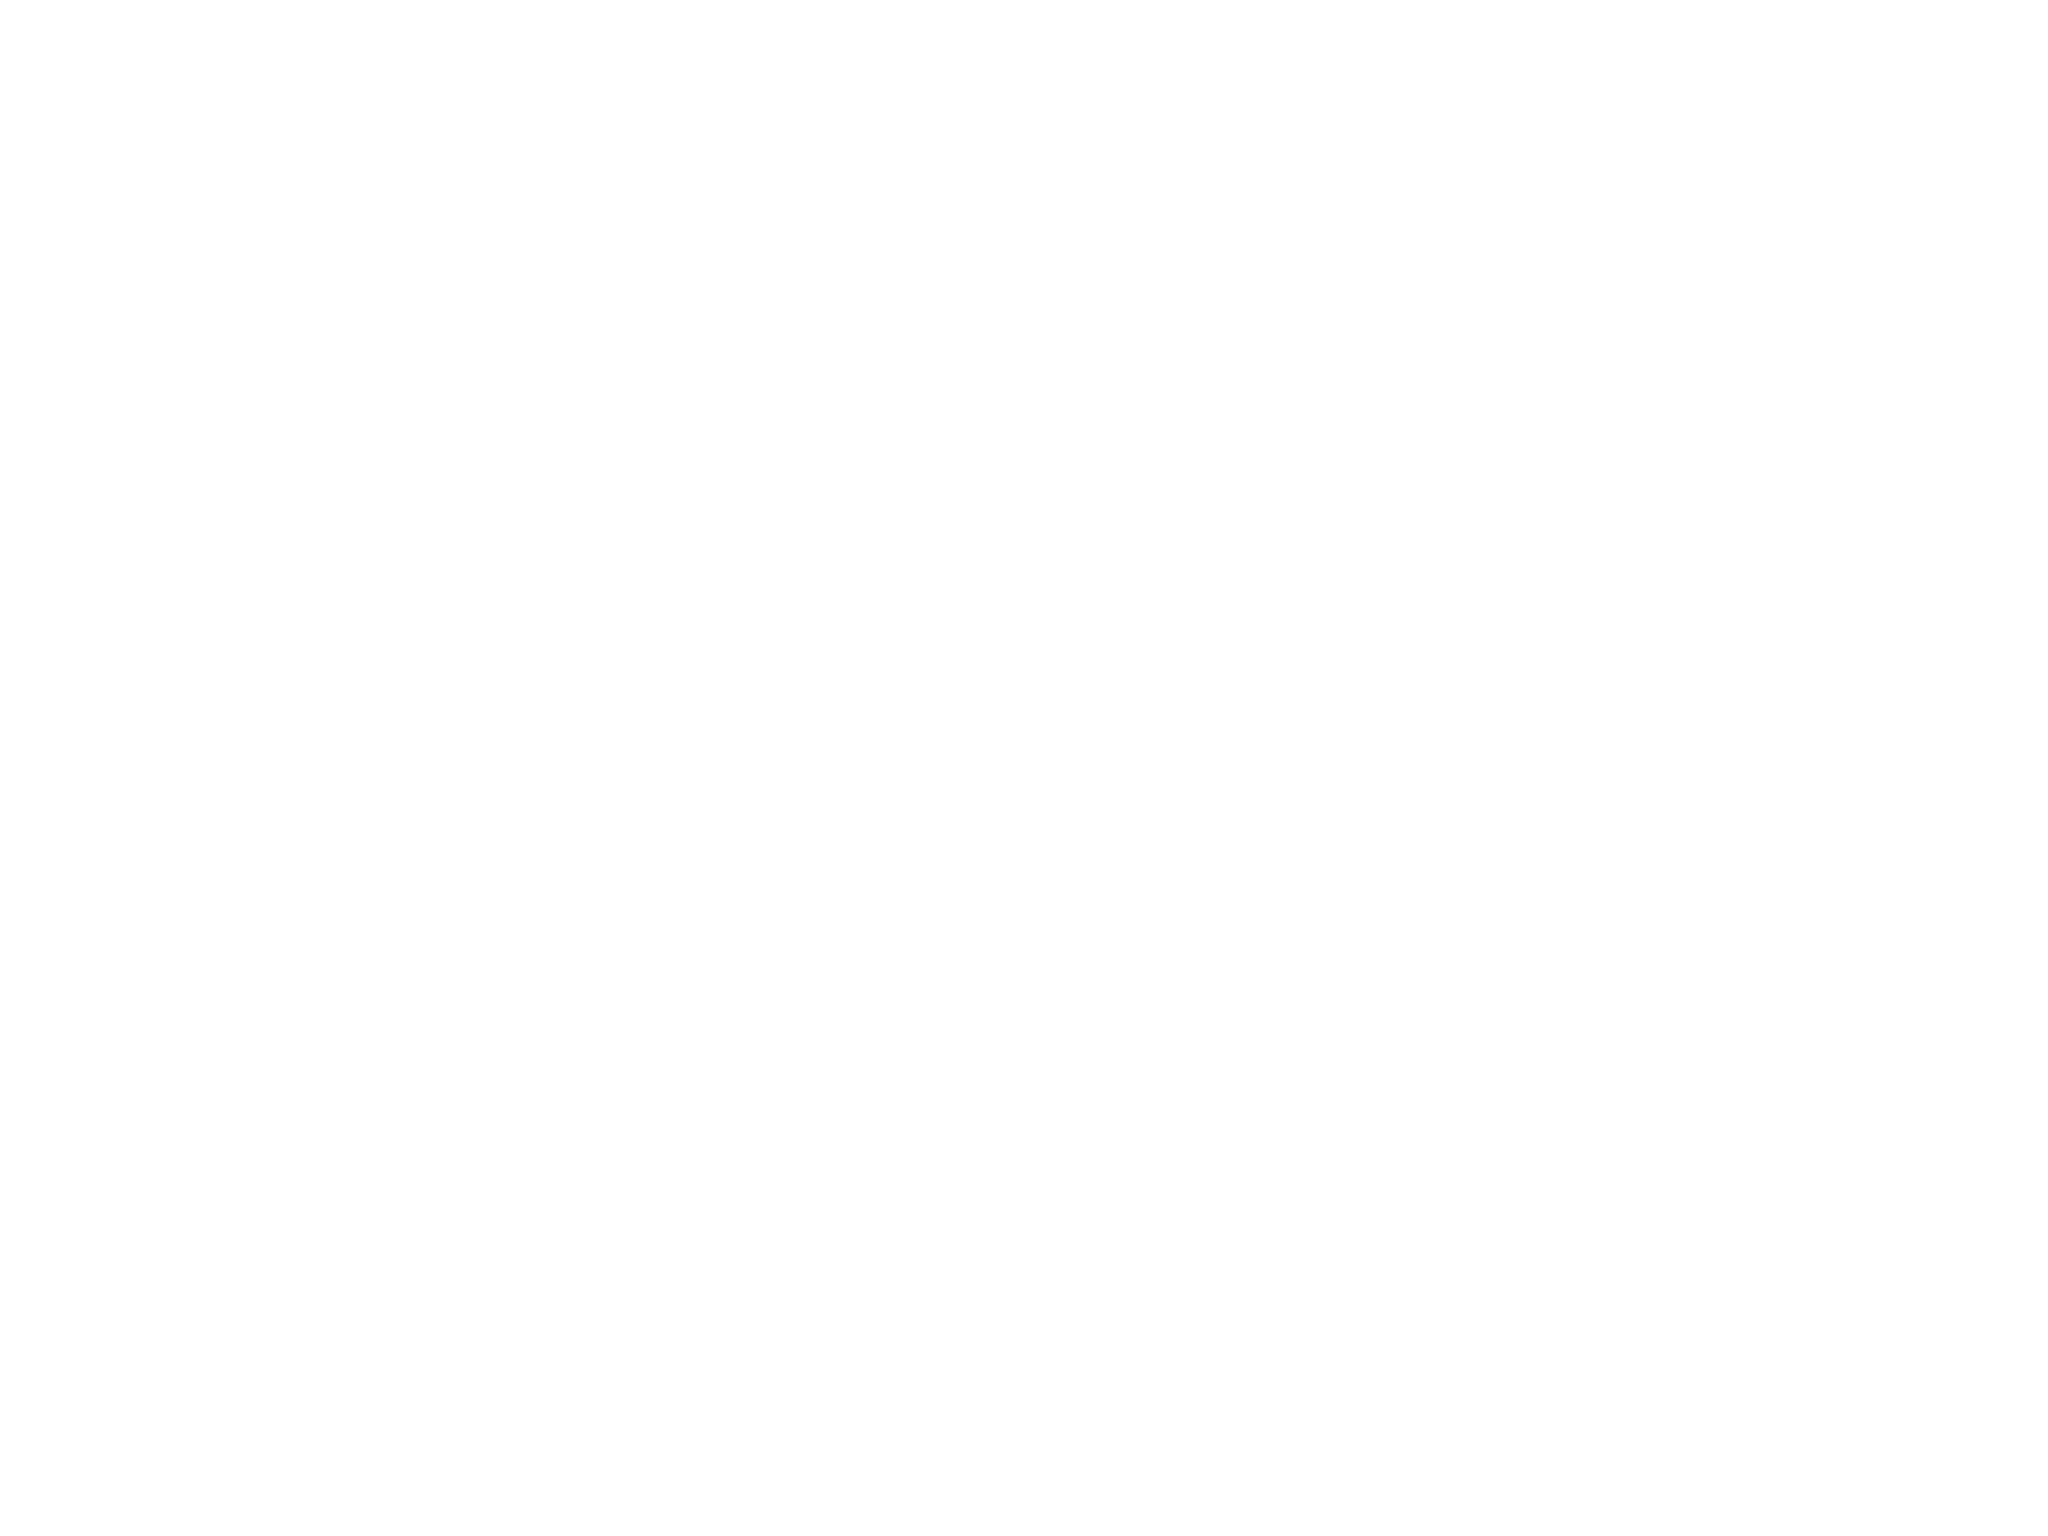 Quilter logo white-2